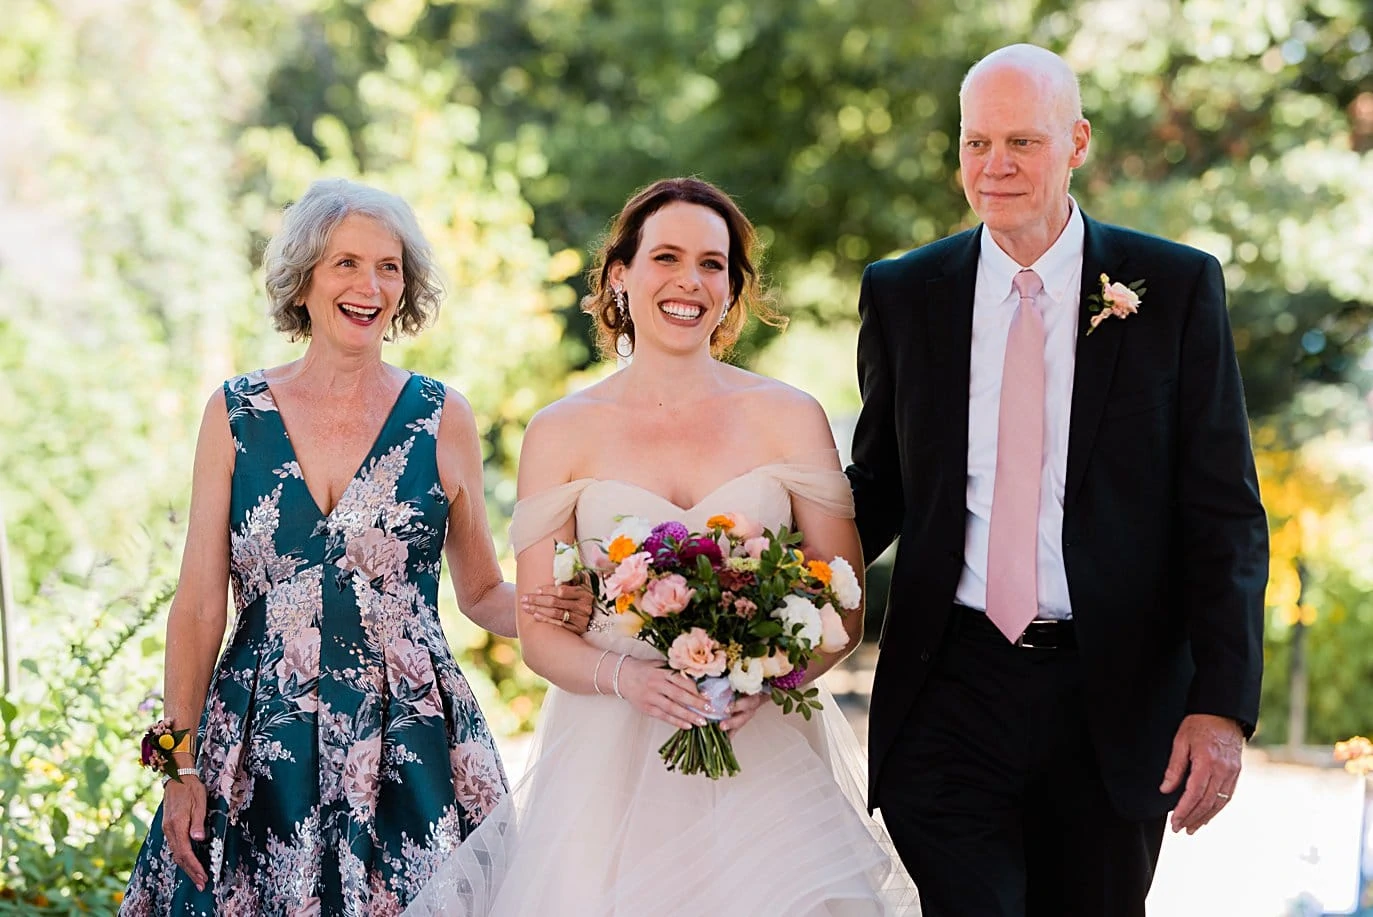 bride walks down aisle with parents at Denver Botanic Gardens microwedding by Denver wedding photographer Jennie Crate